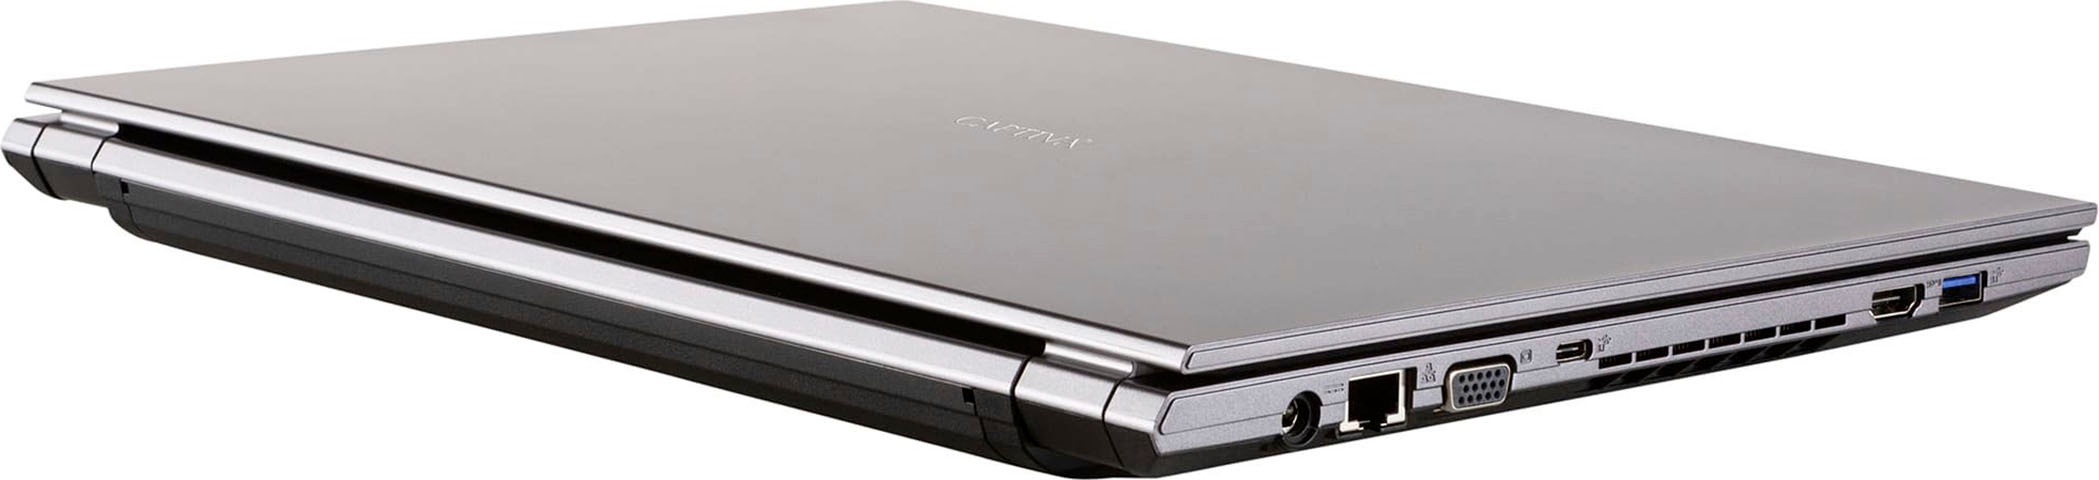 CAPTIVA Business-Notebook »Power Starter I69-774«, 43,9 cm, / 17,3 Zoll, Intel, Core i3, 500 GB SSD